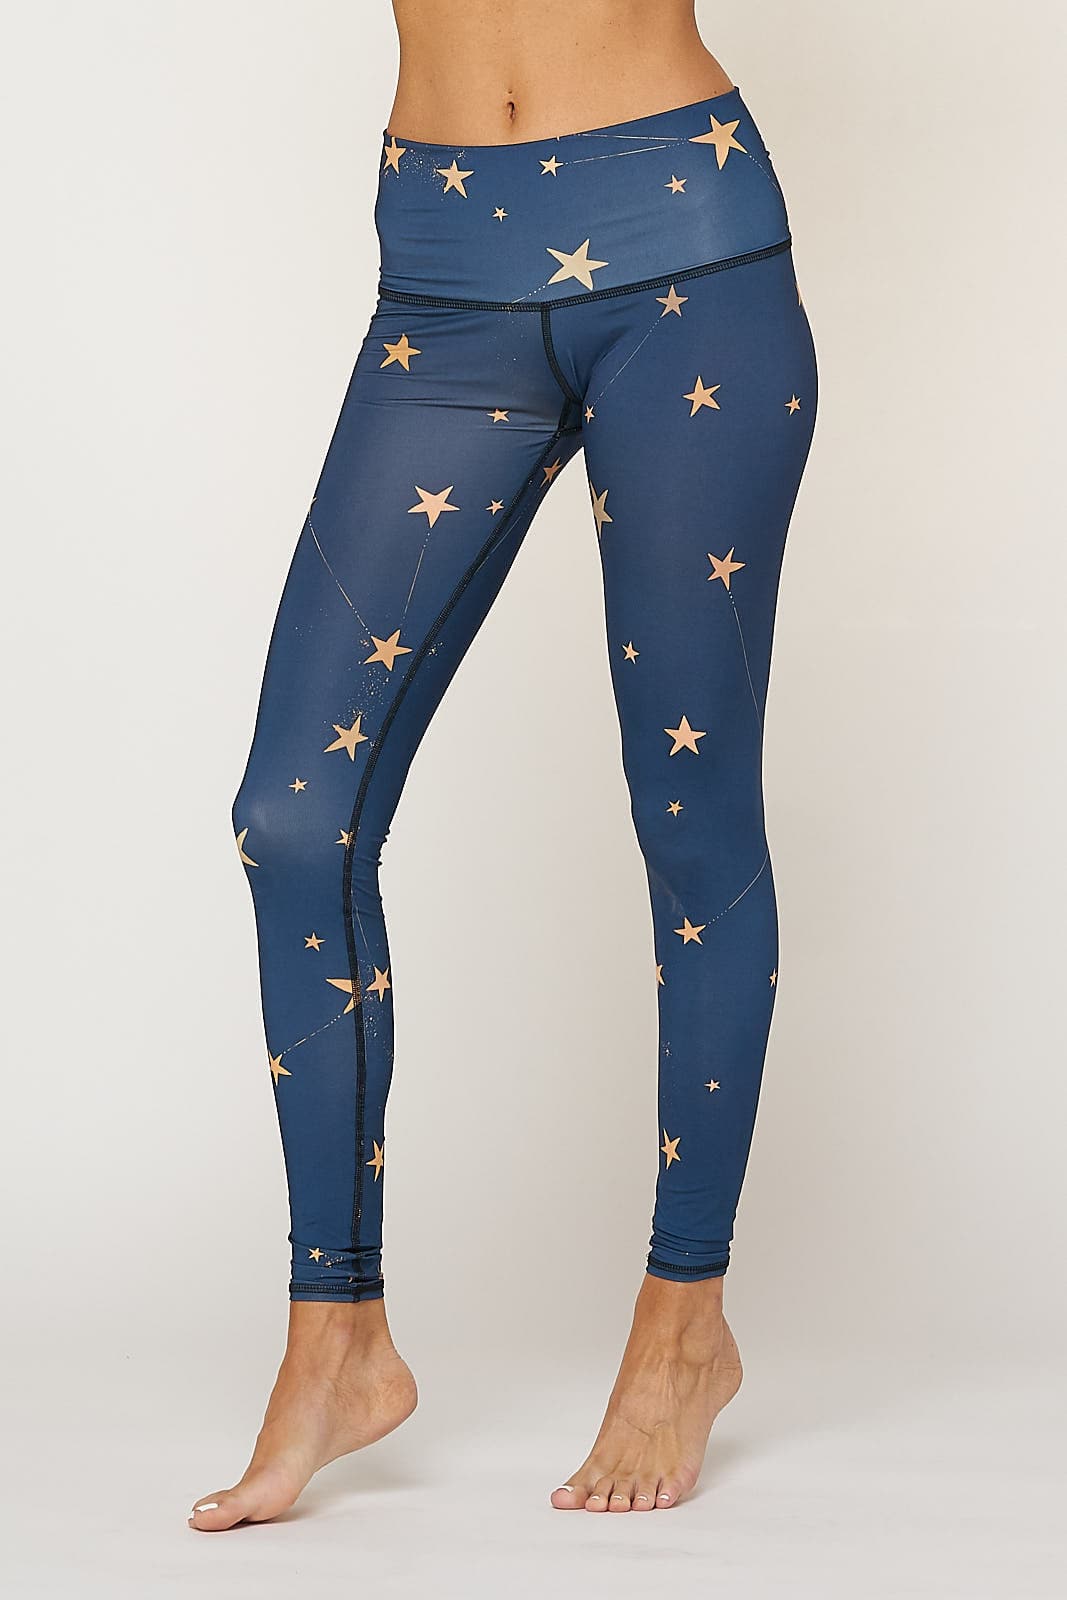 Great Star Nation Hot Pant by teeki - womens yoga leggings bottoms – Teeki  Boutique